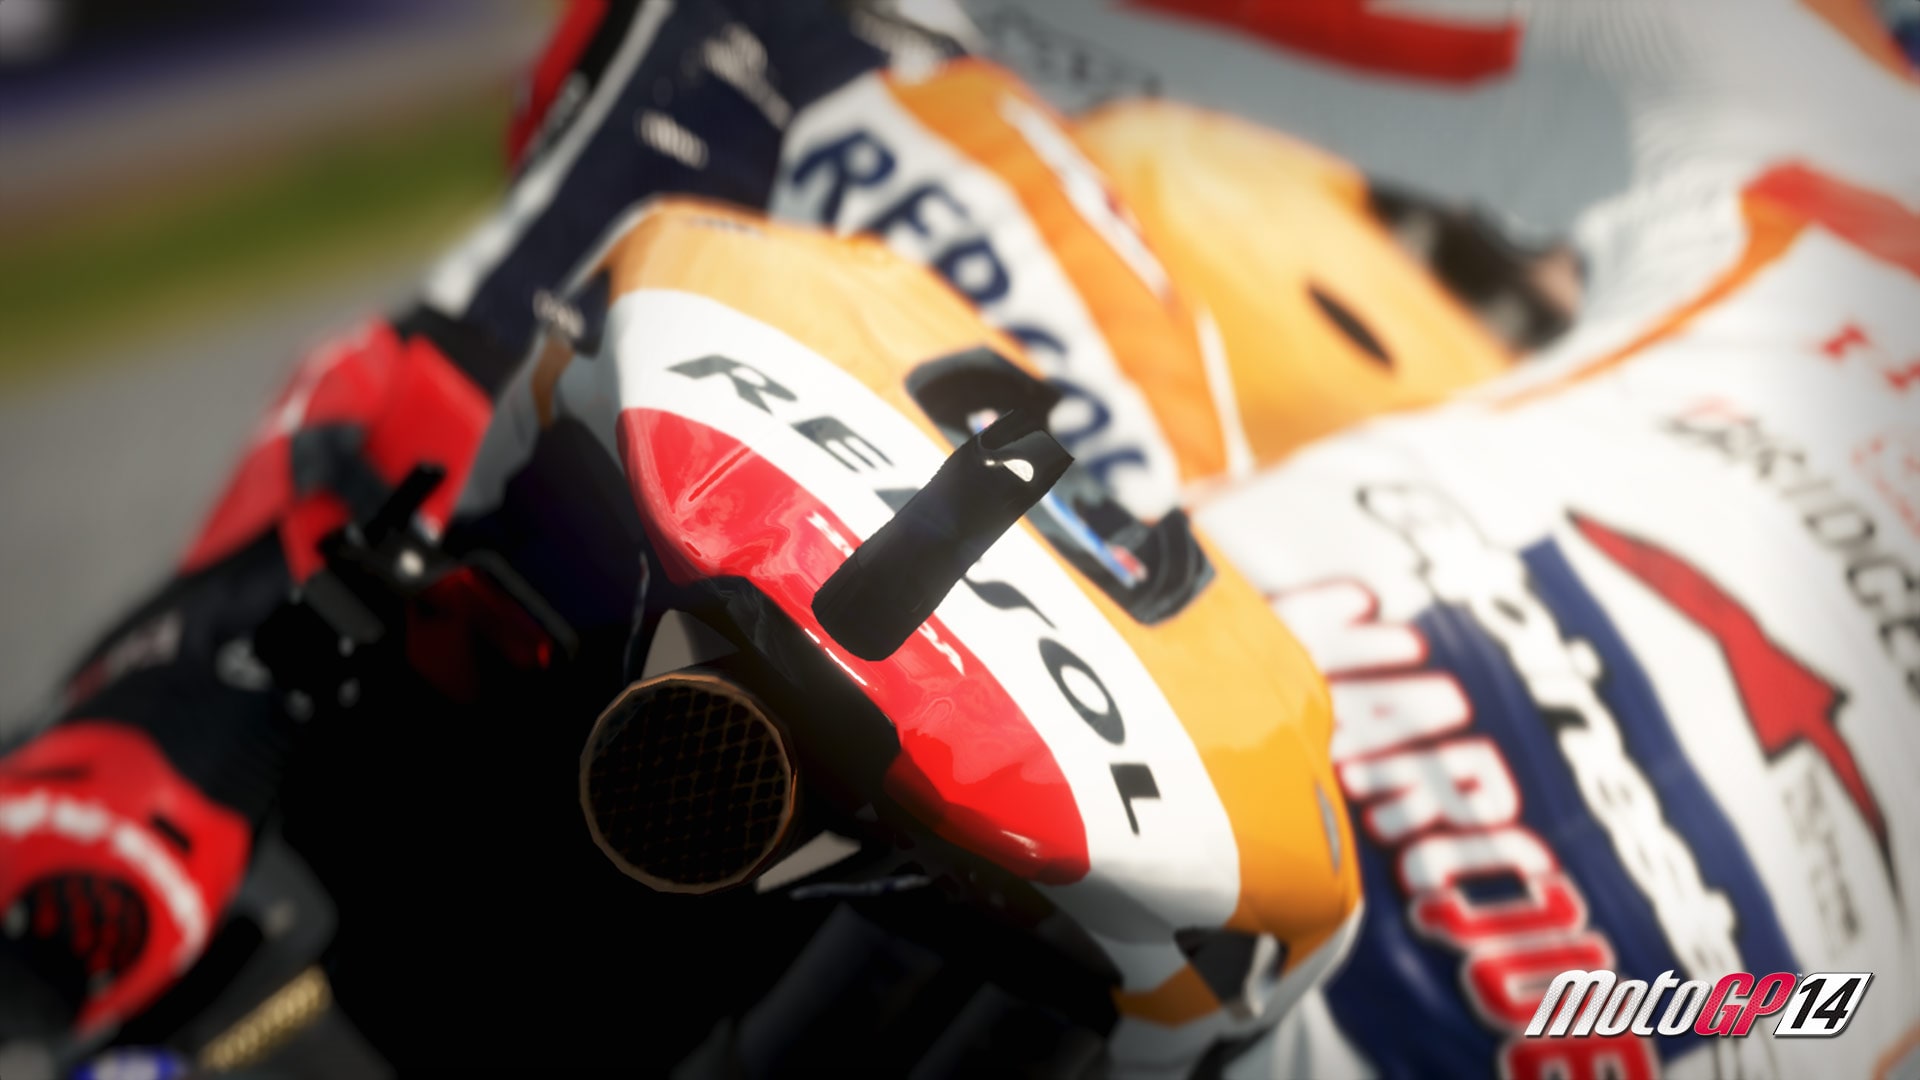 Jogo Moto GP 14 PS4 - nivalmix